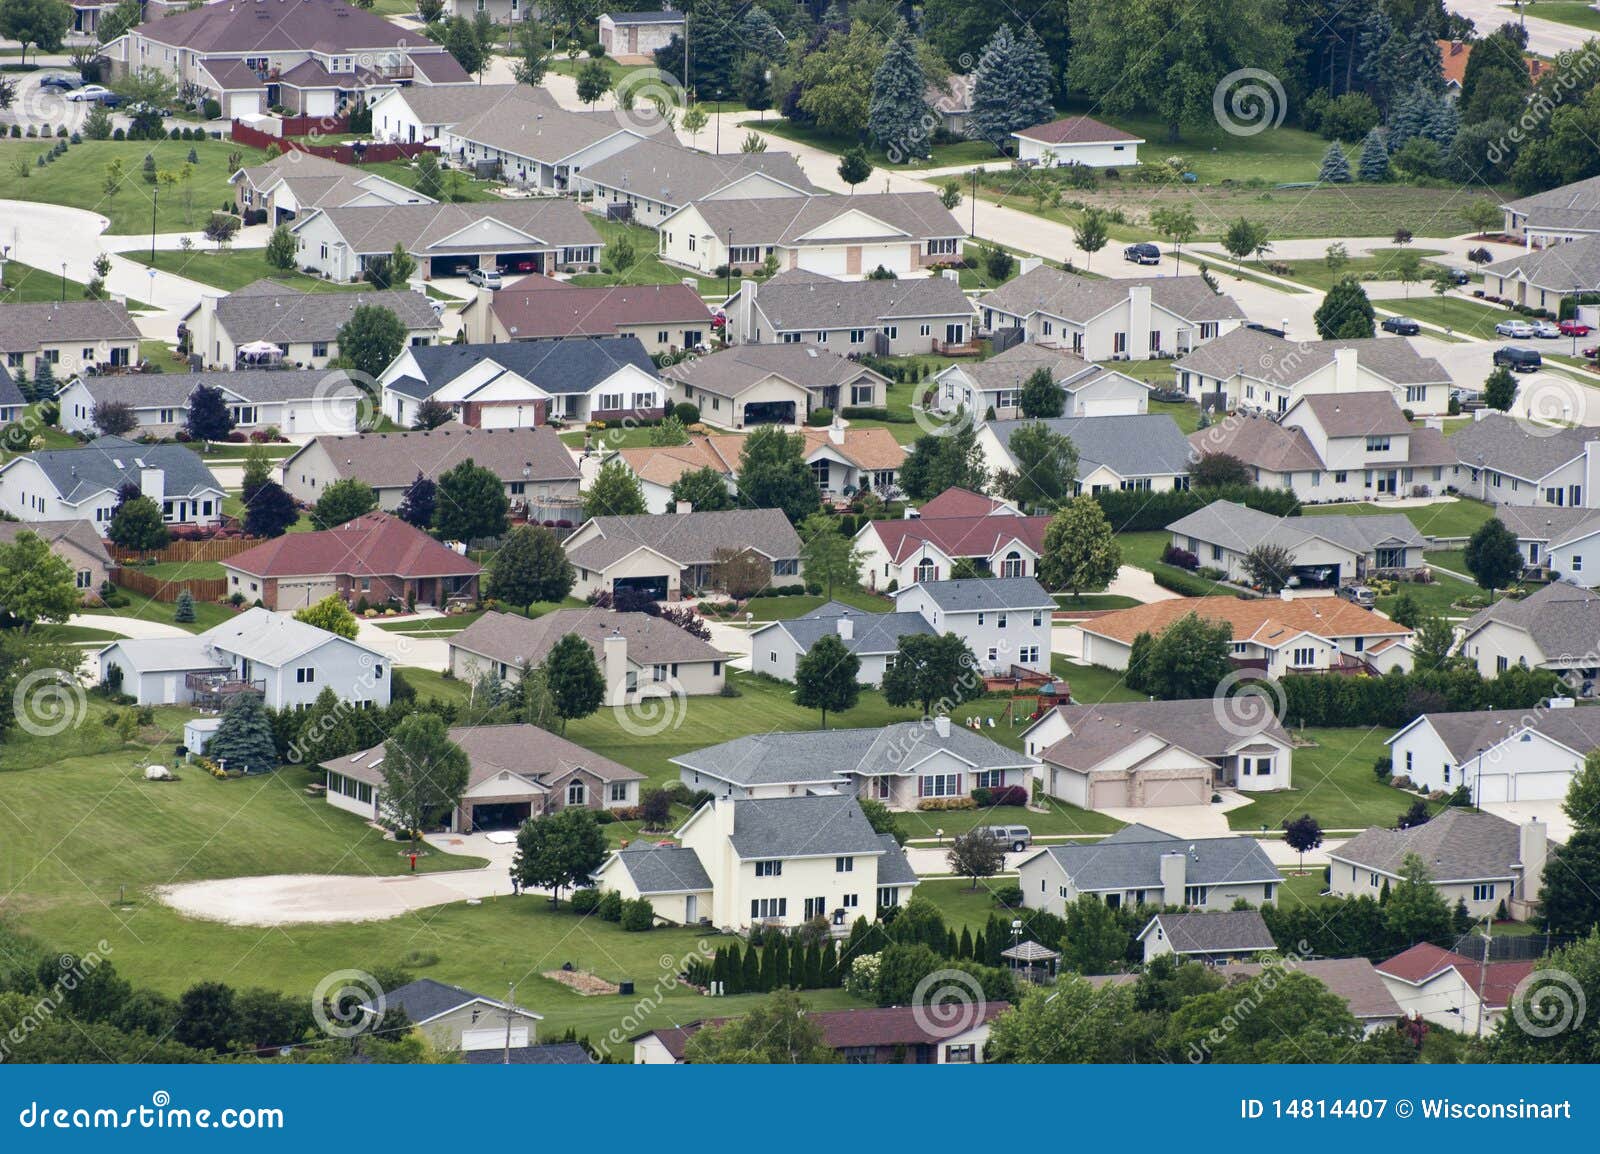 aerial view neighborhood houses, homes, residences